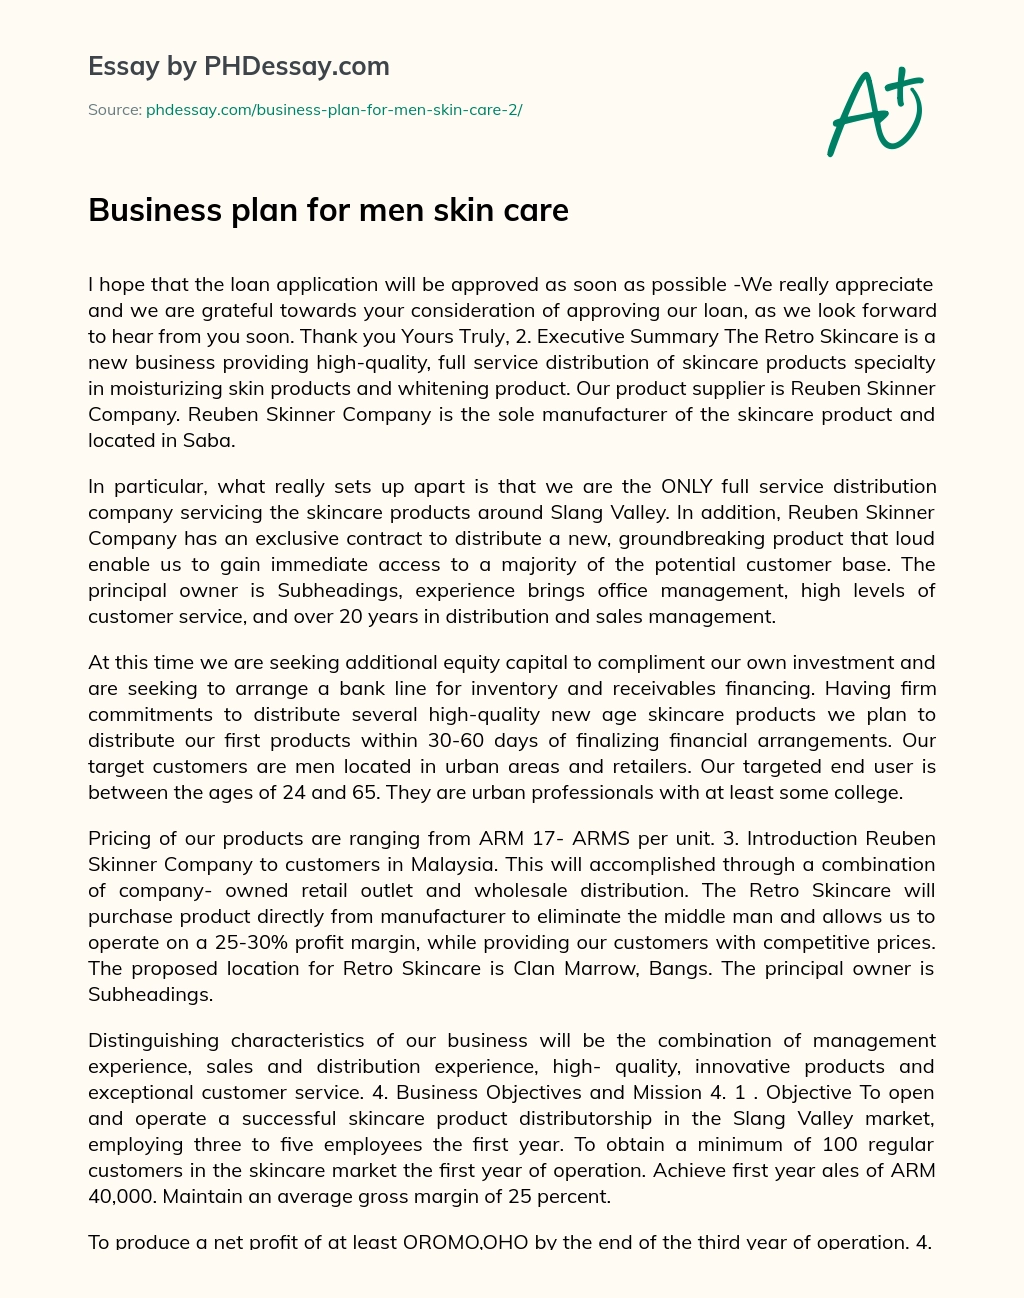 Business plan for men skin care essay